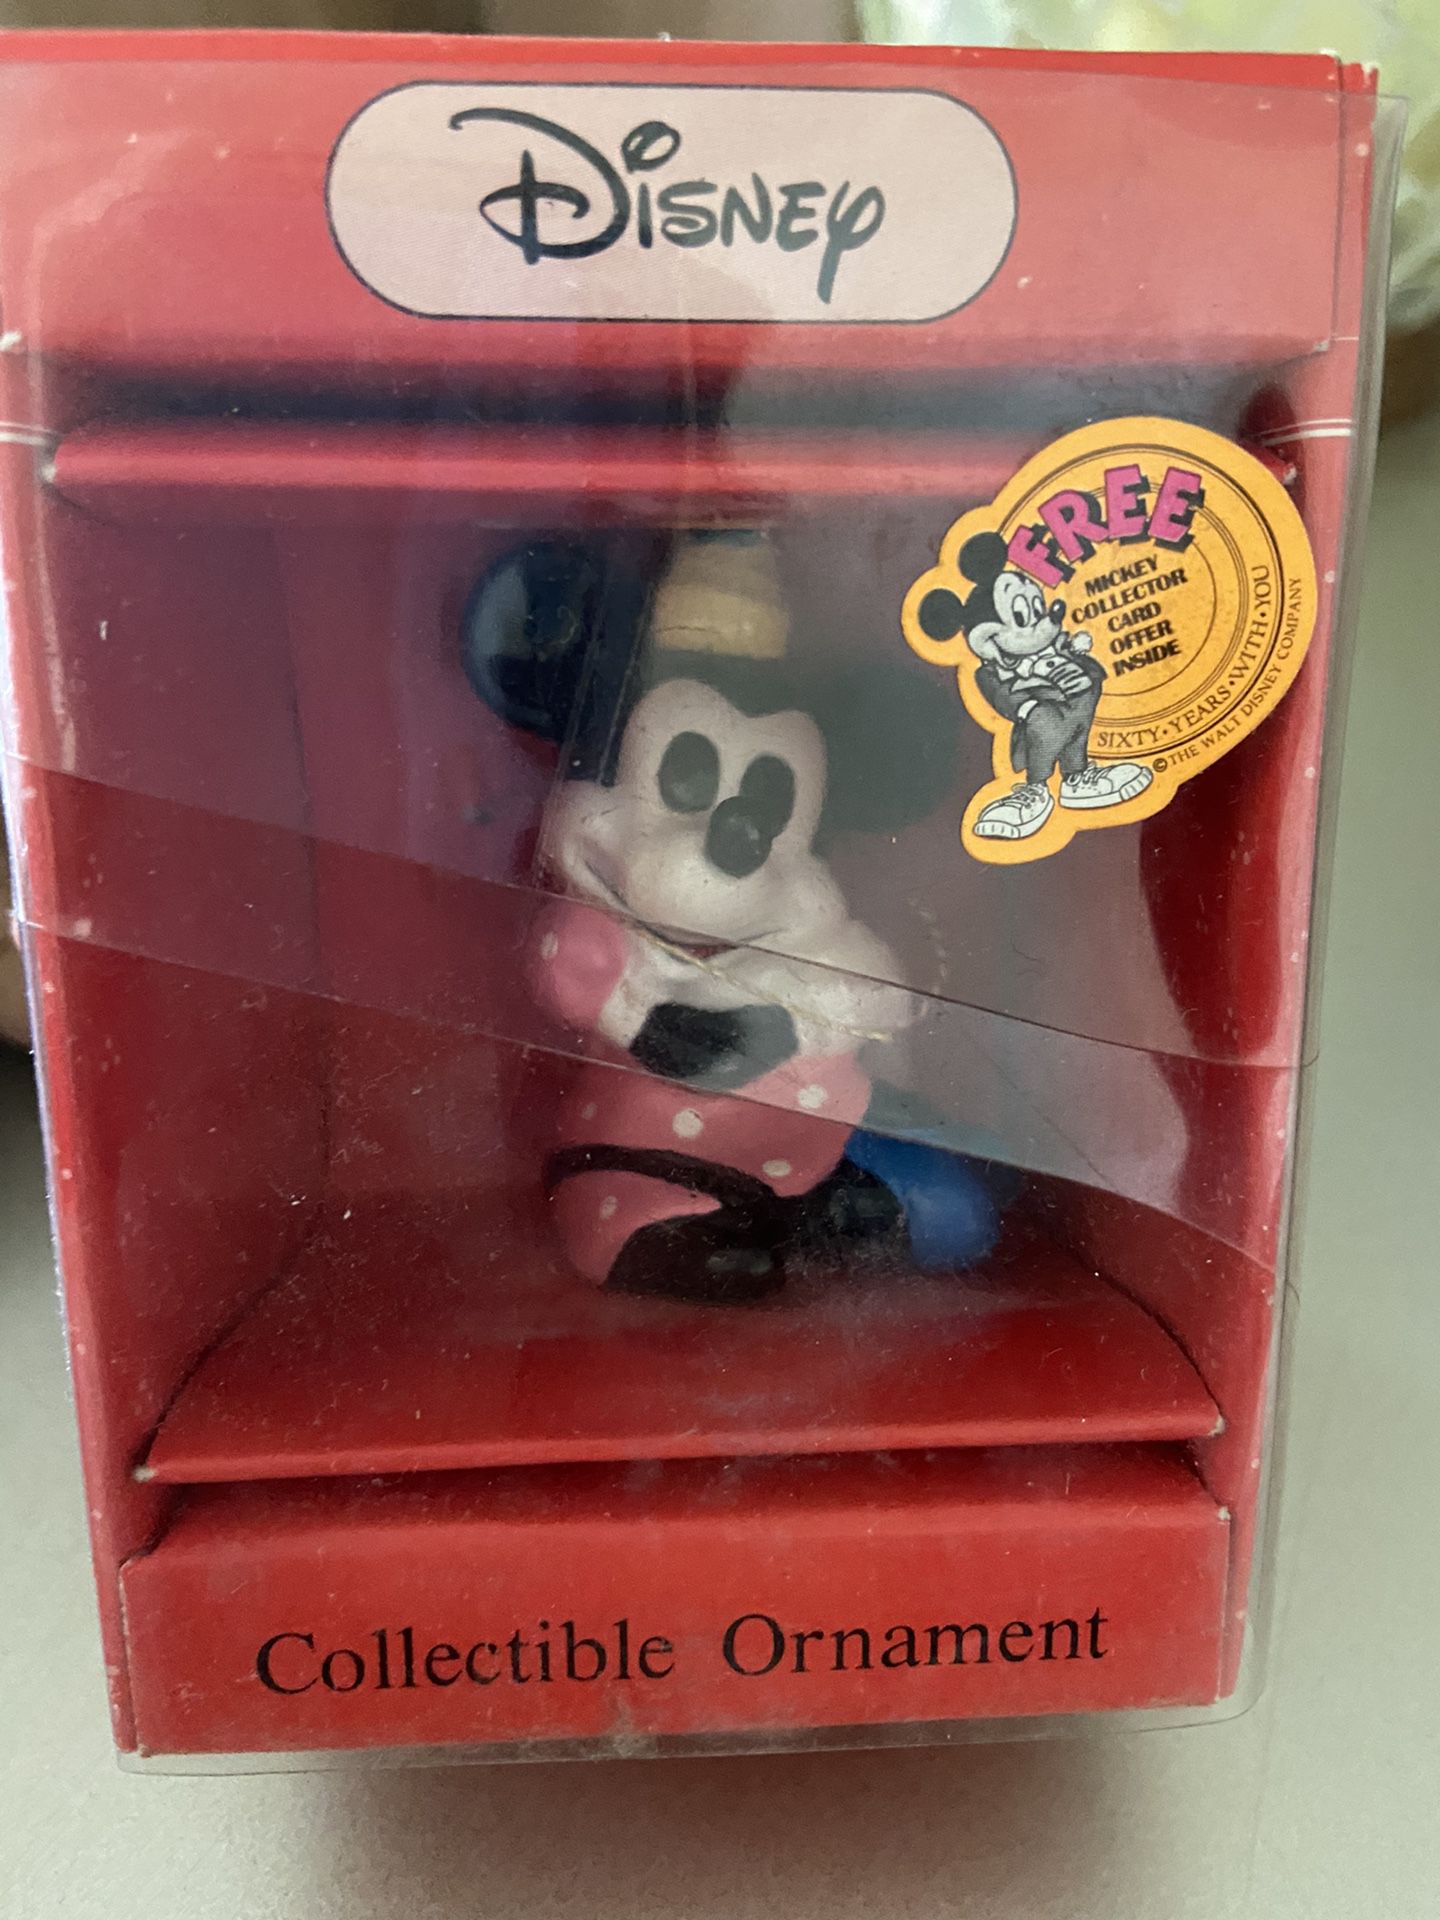 Christmas Disney Minnie Mouse Schmid collectible ornament vintage New